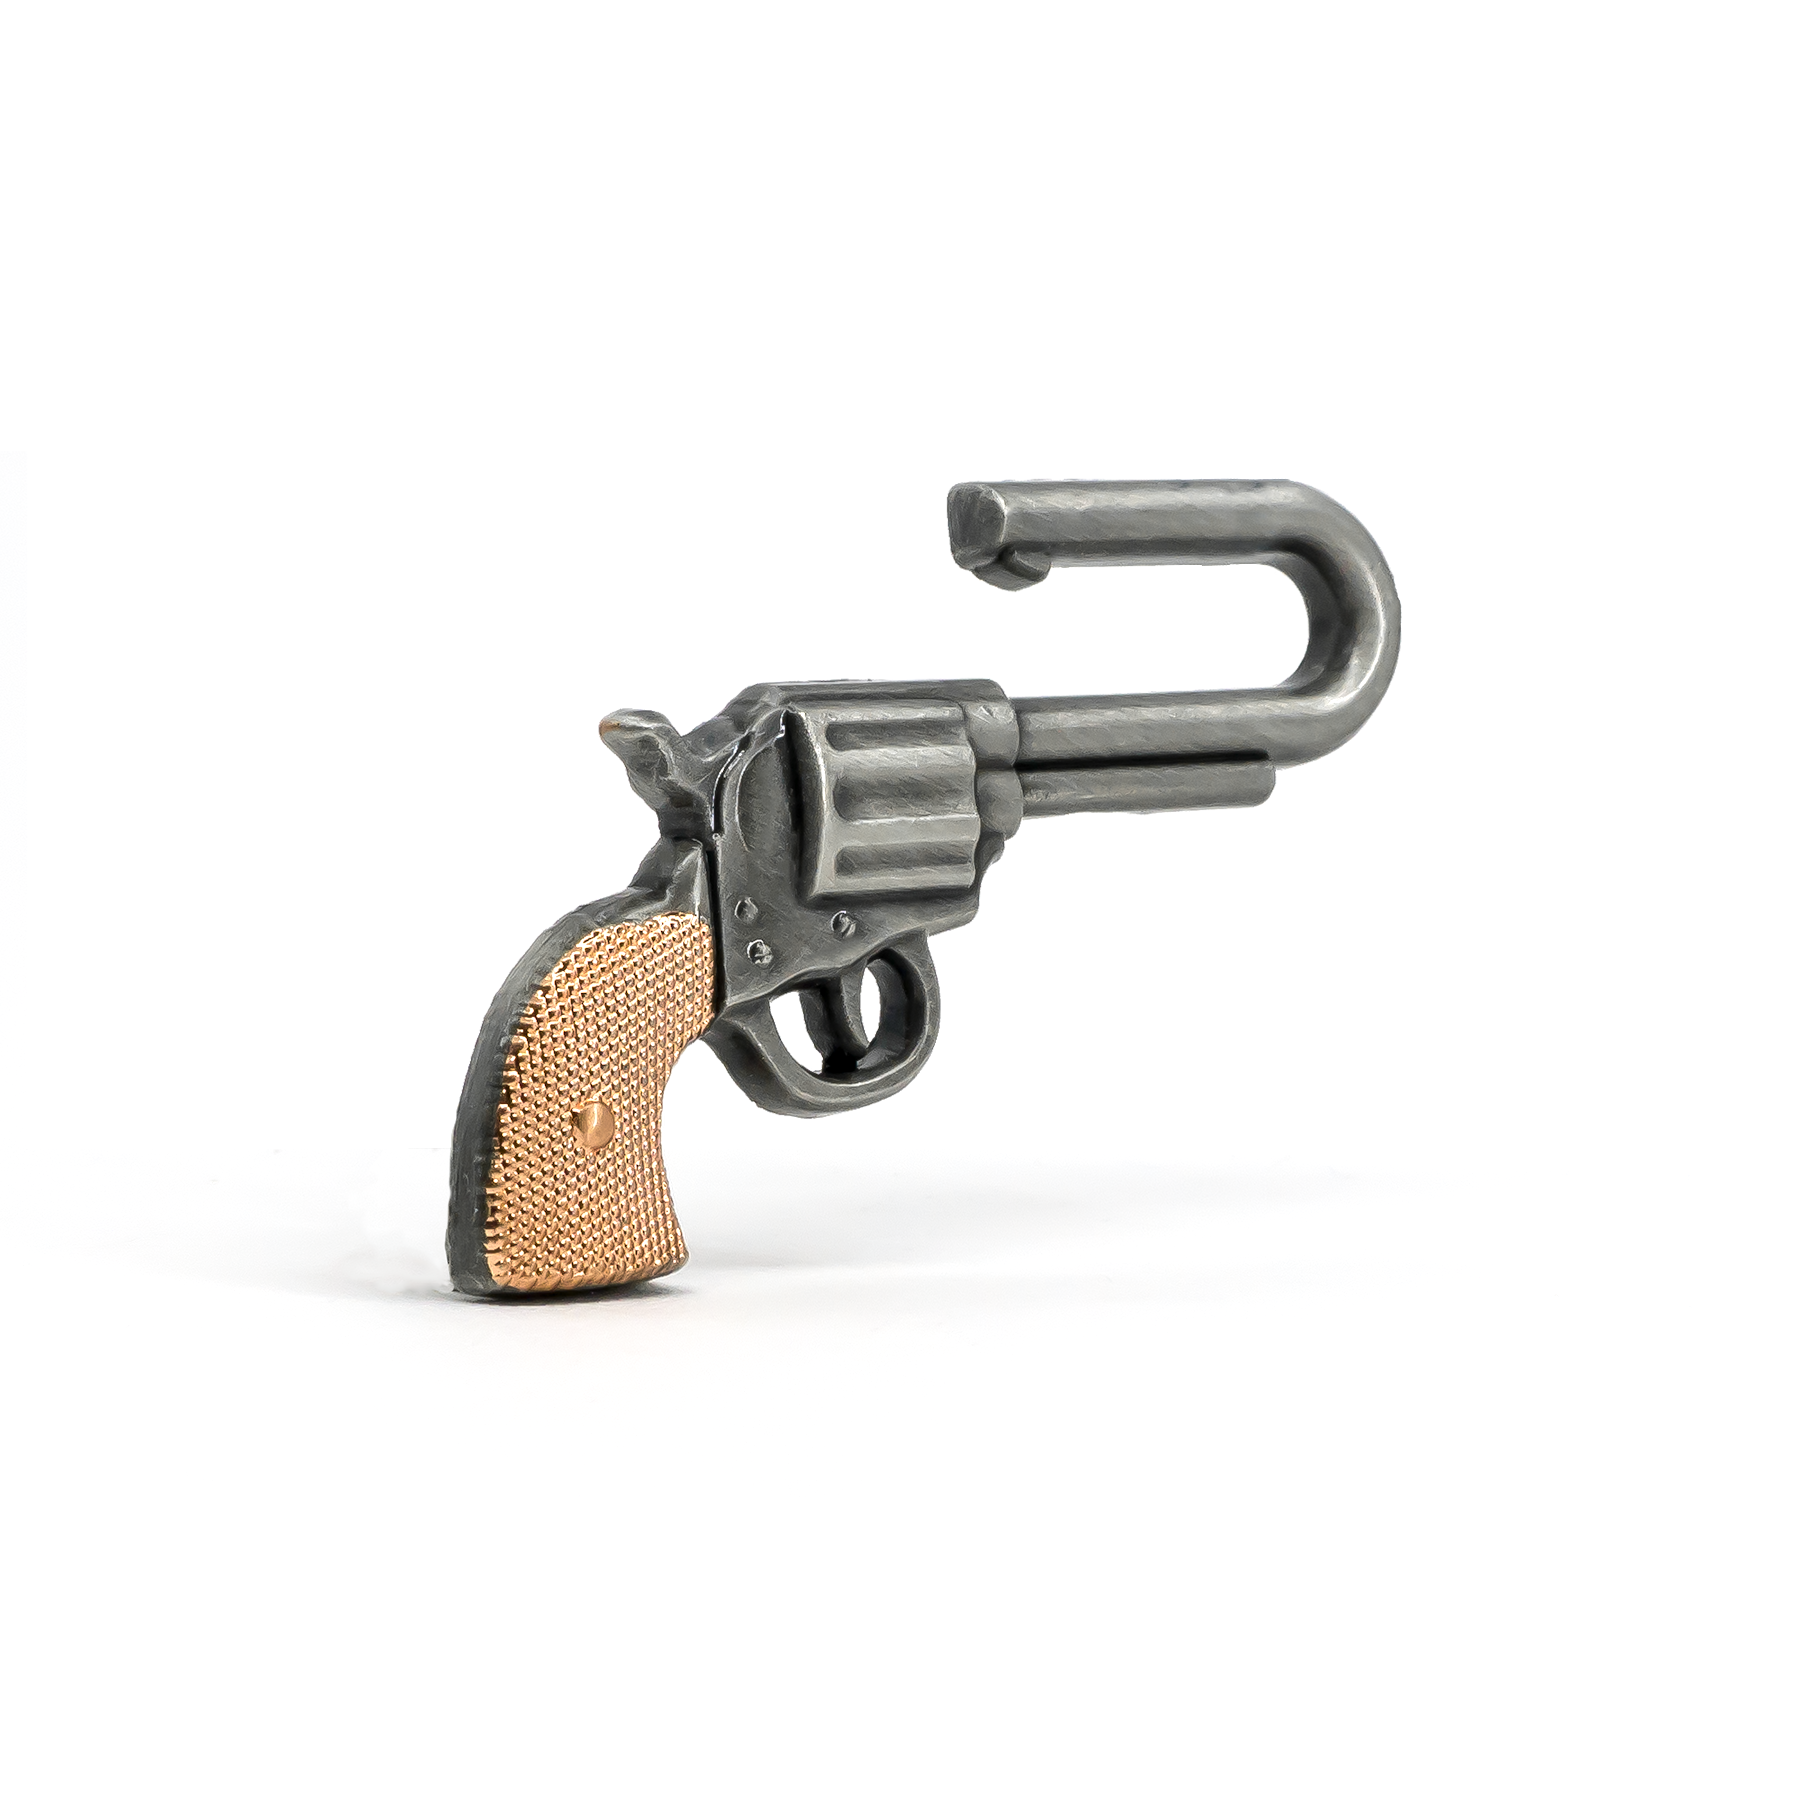 Gun molded pin